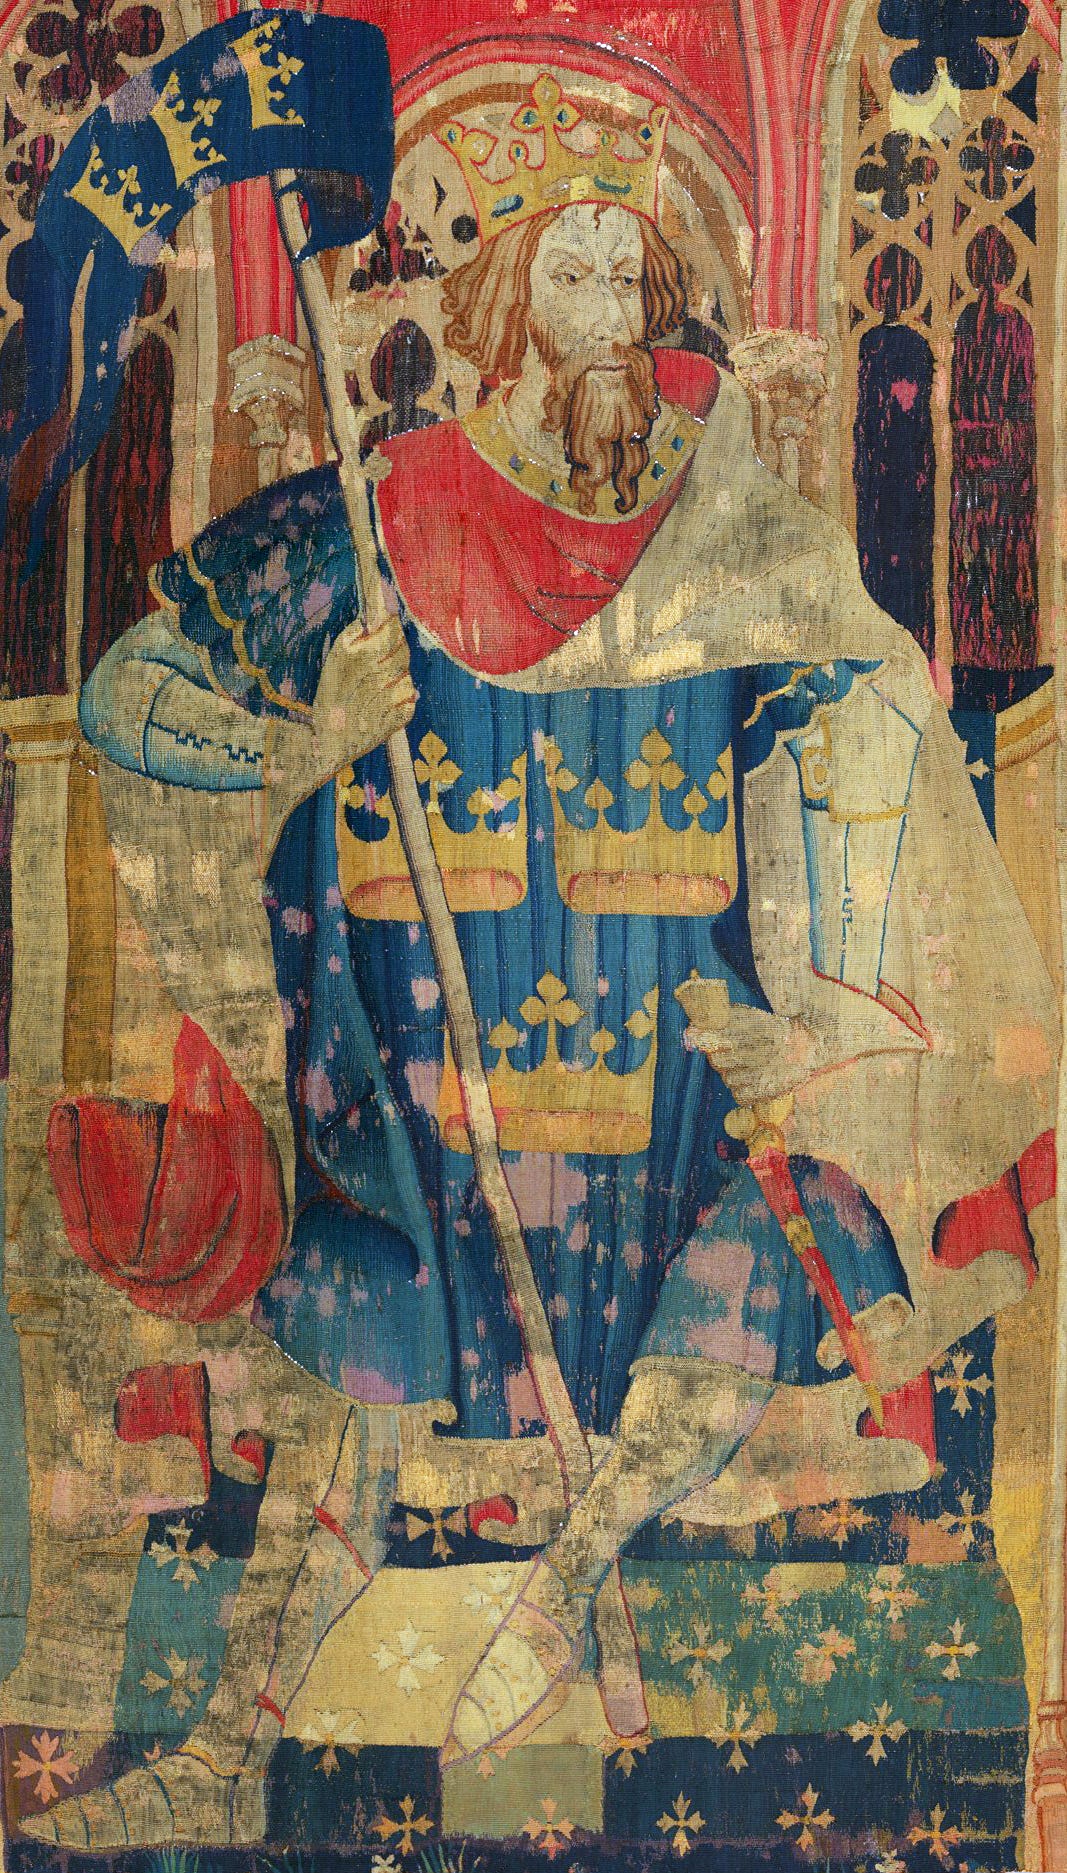 King Arthur - Wikipedia